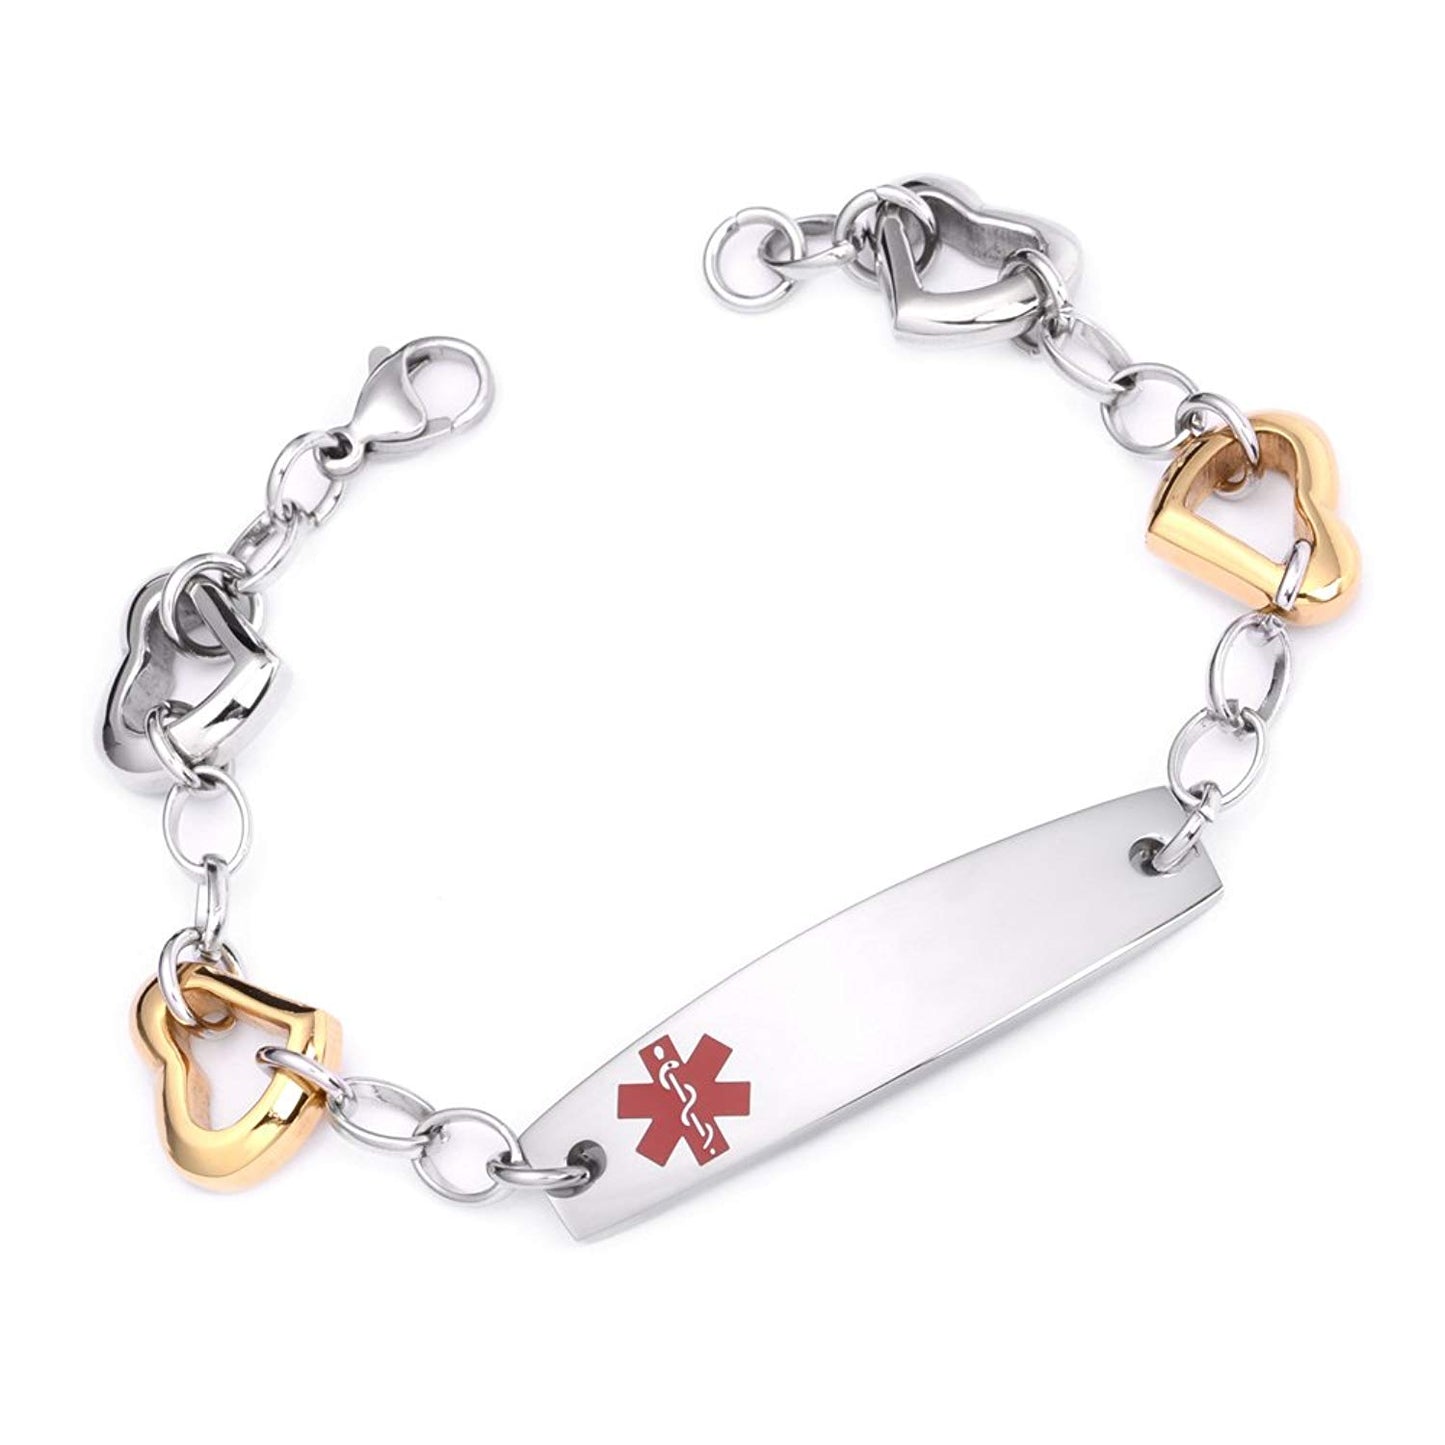 Tarring Free engraving Creativity Heart Medical alert id bracelets for Women & Girls